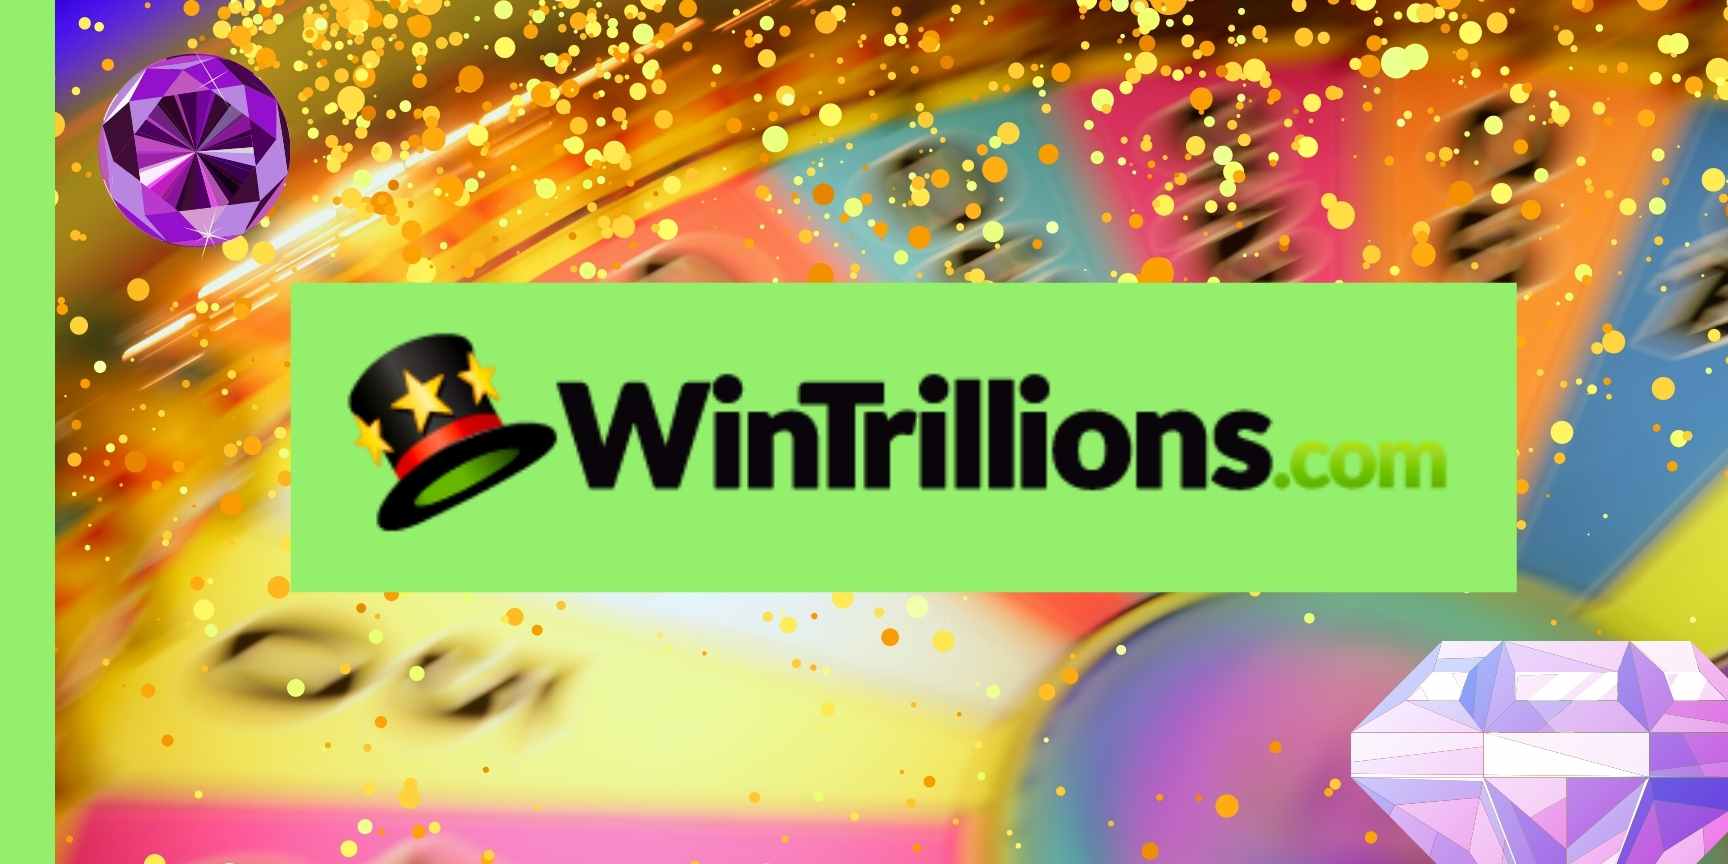 wintrillions